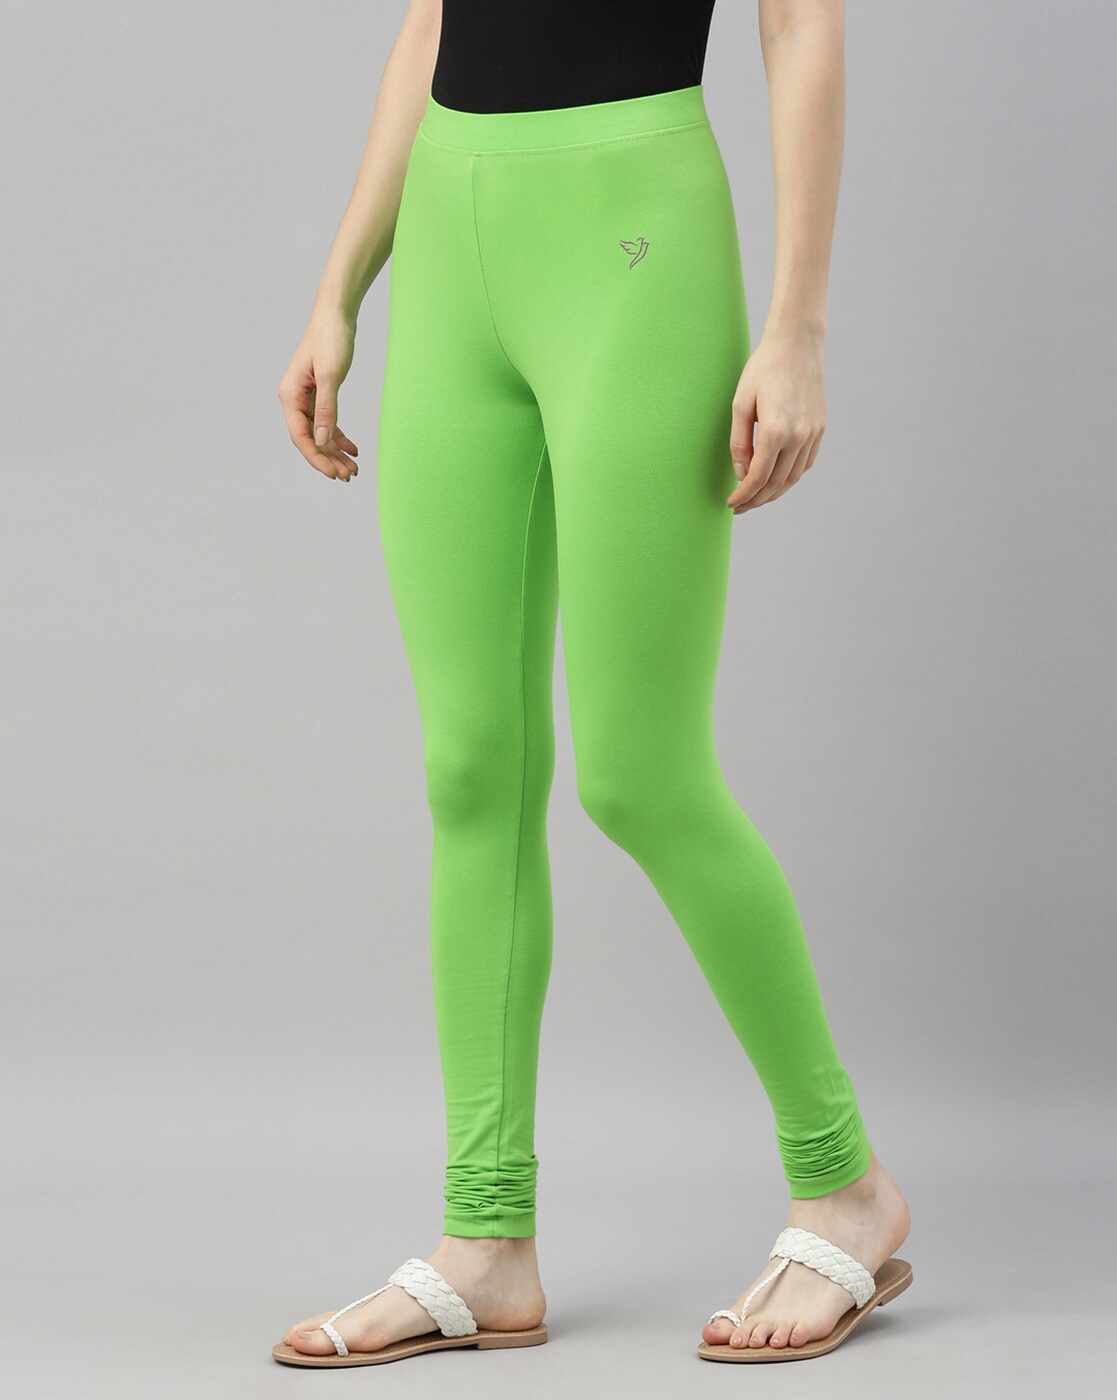 Details more than 124 lime green leggings womens latest